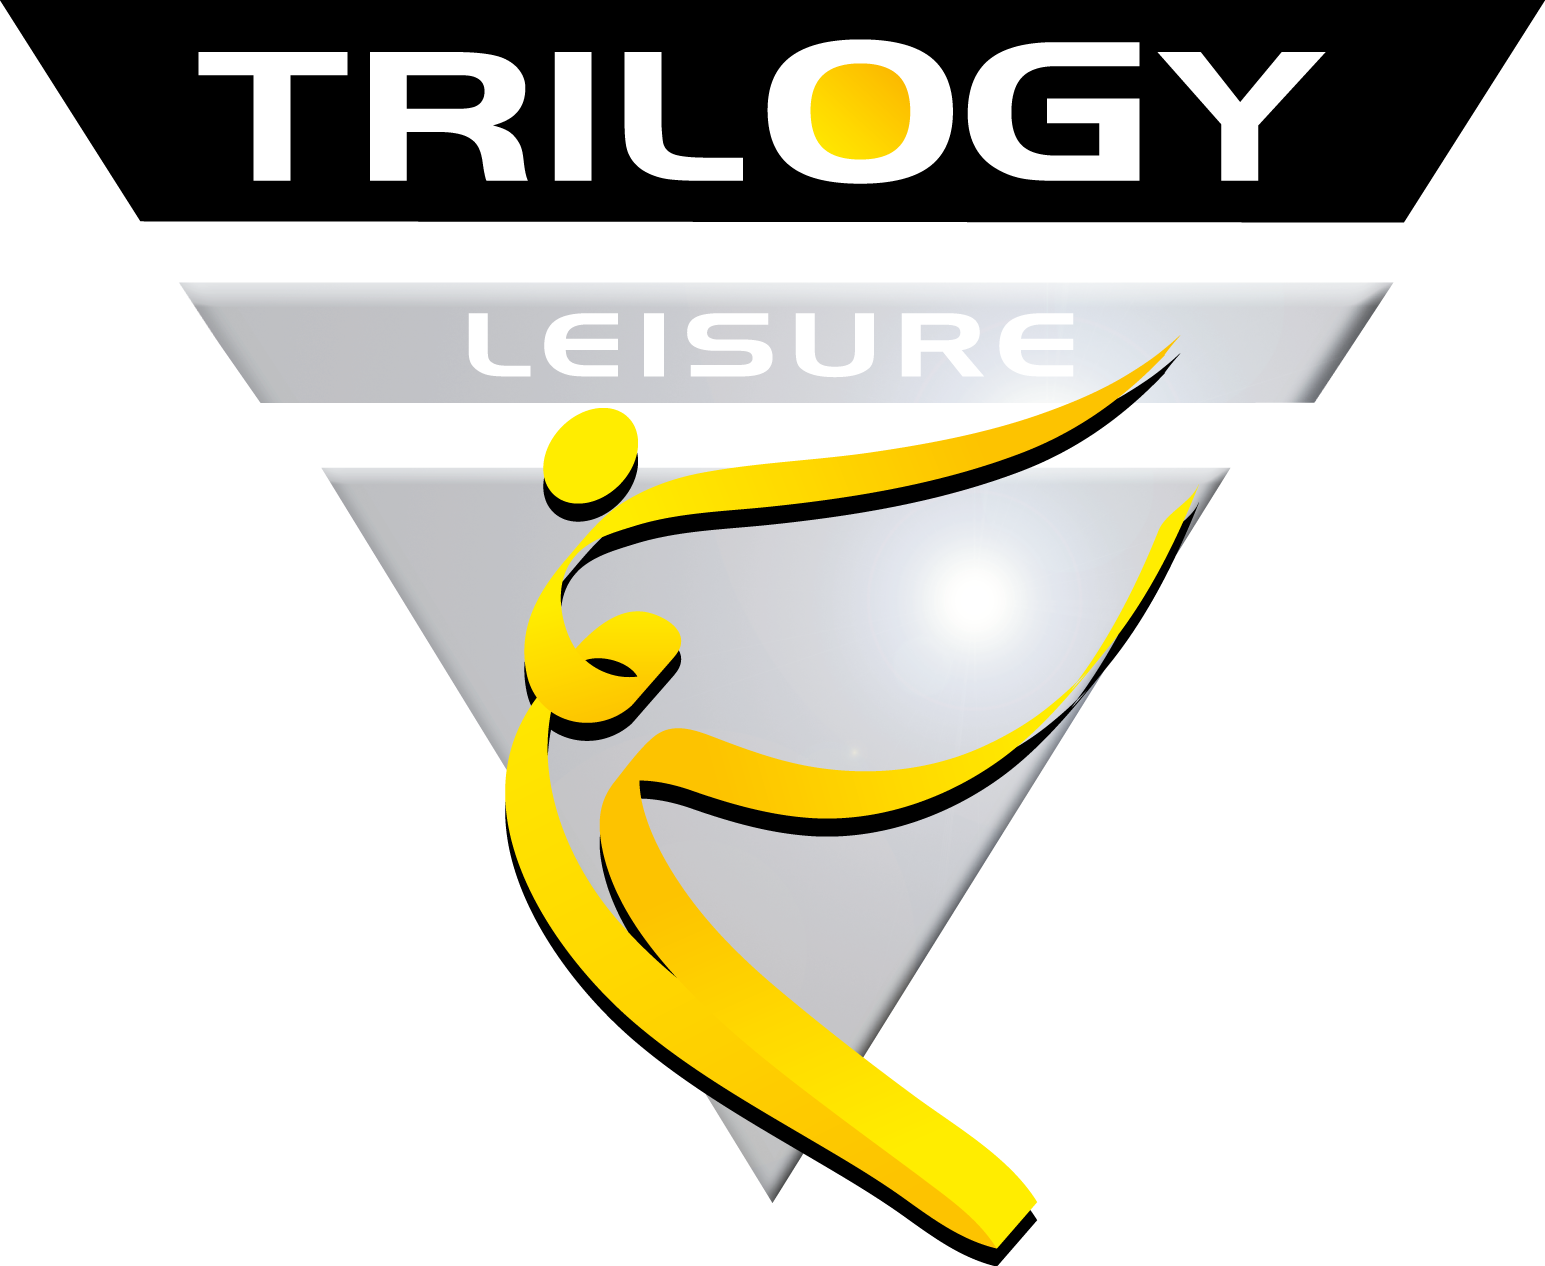 Trilogy Leisure Logo